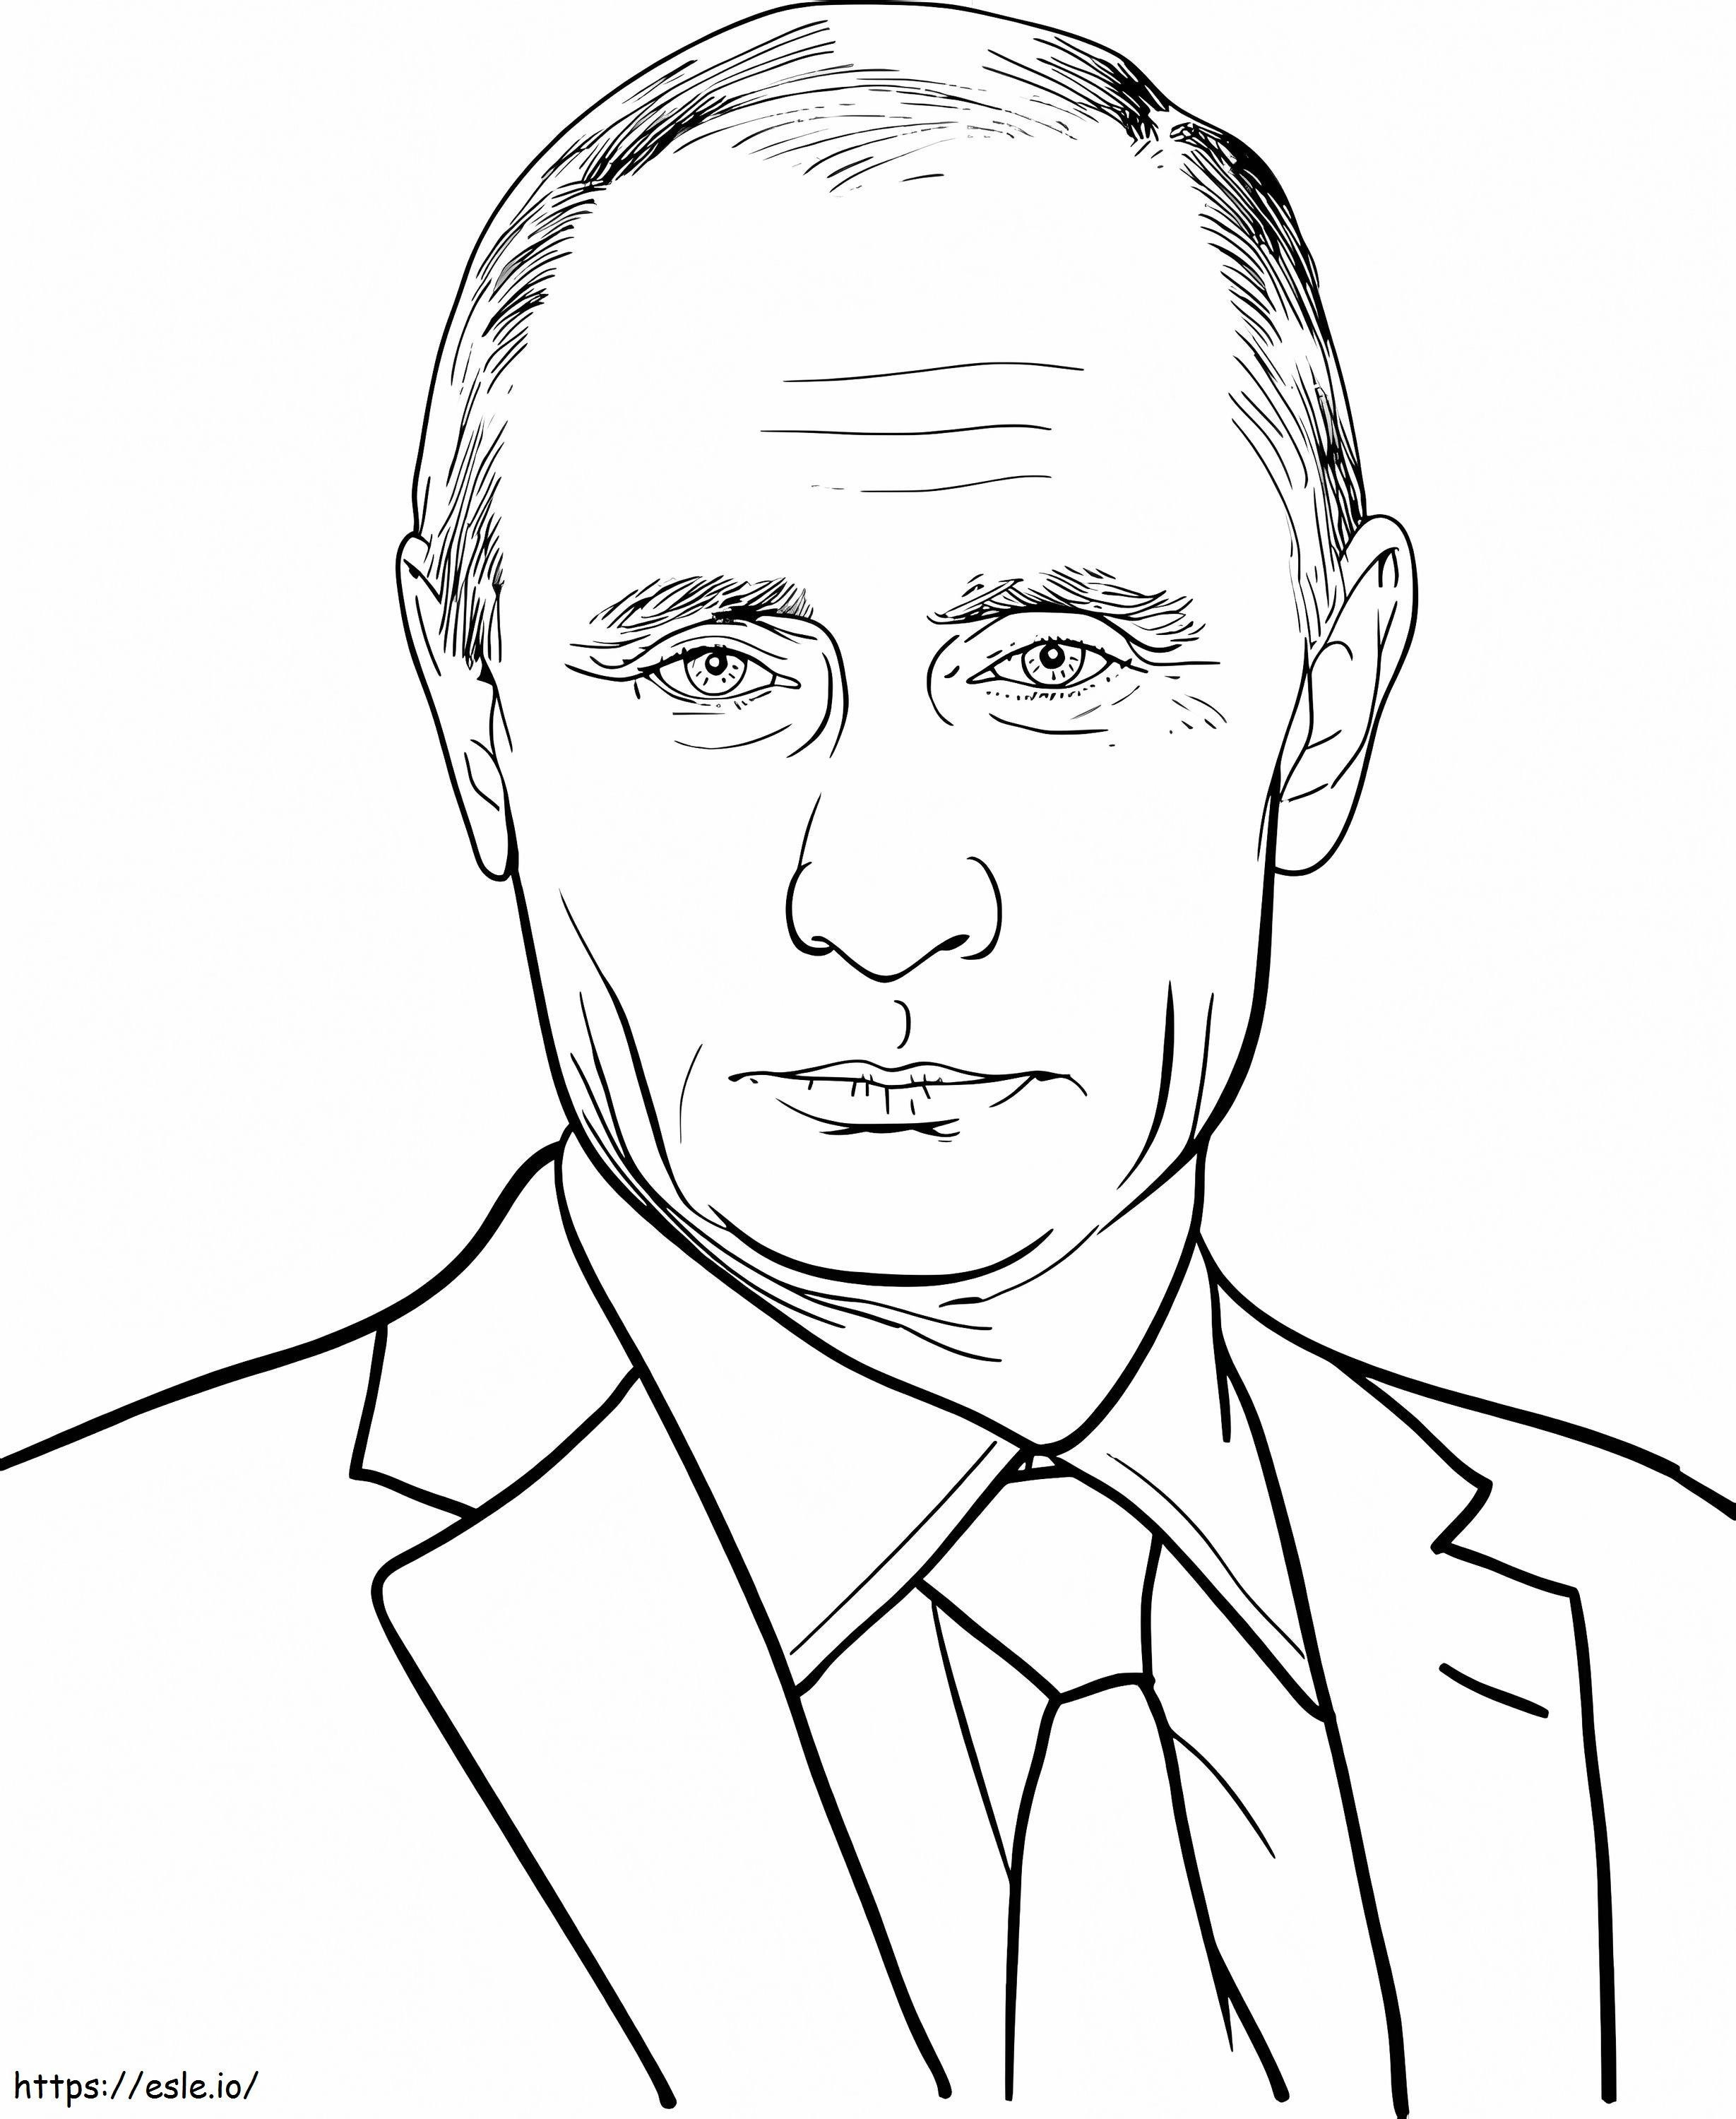 Vladimir Putin 1 coloring page